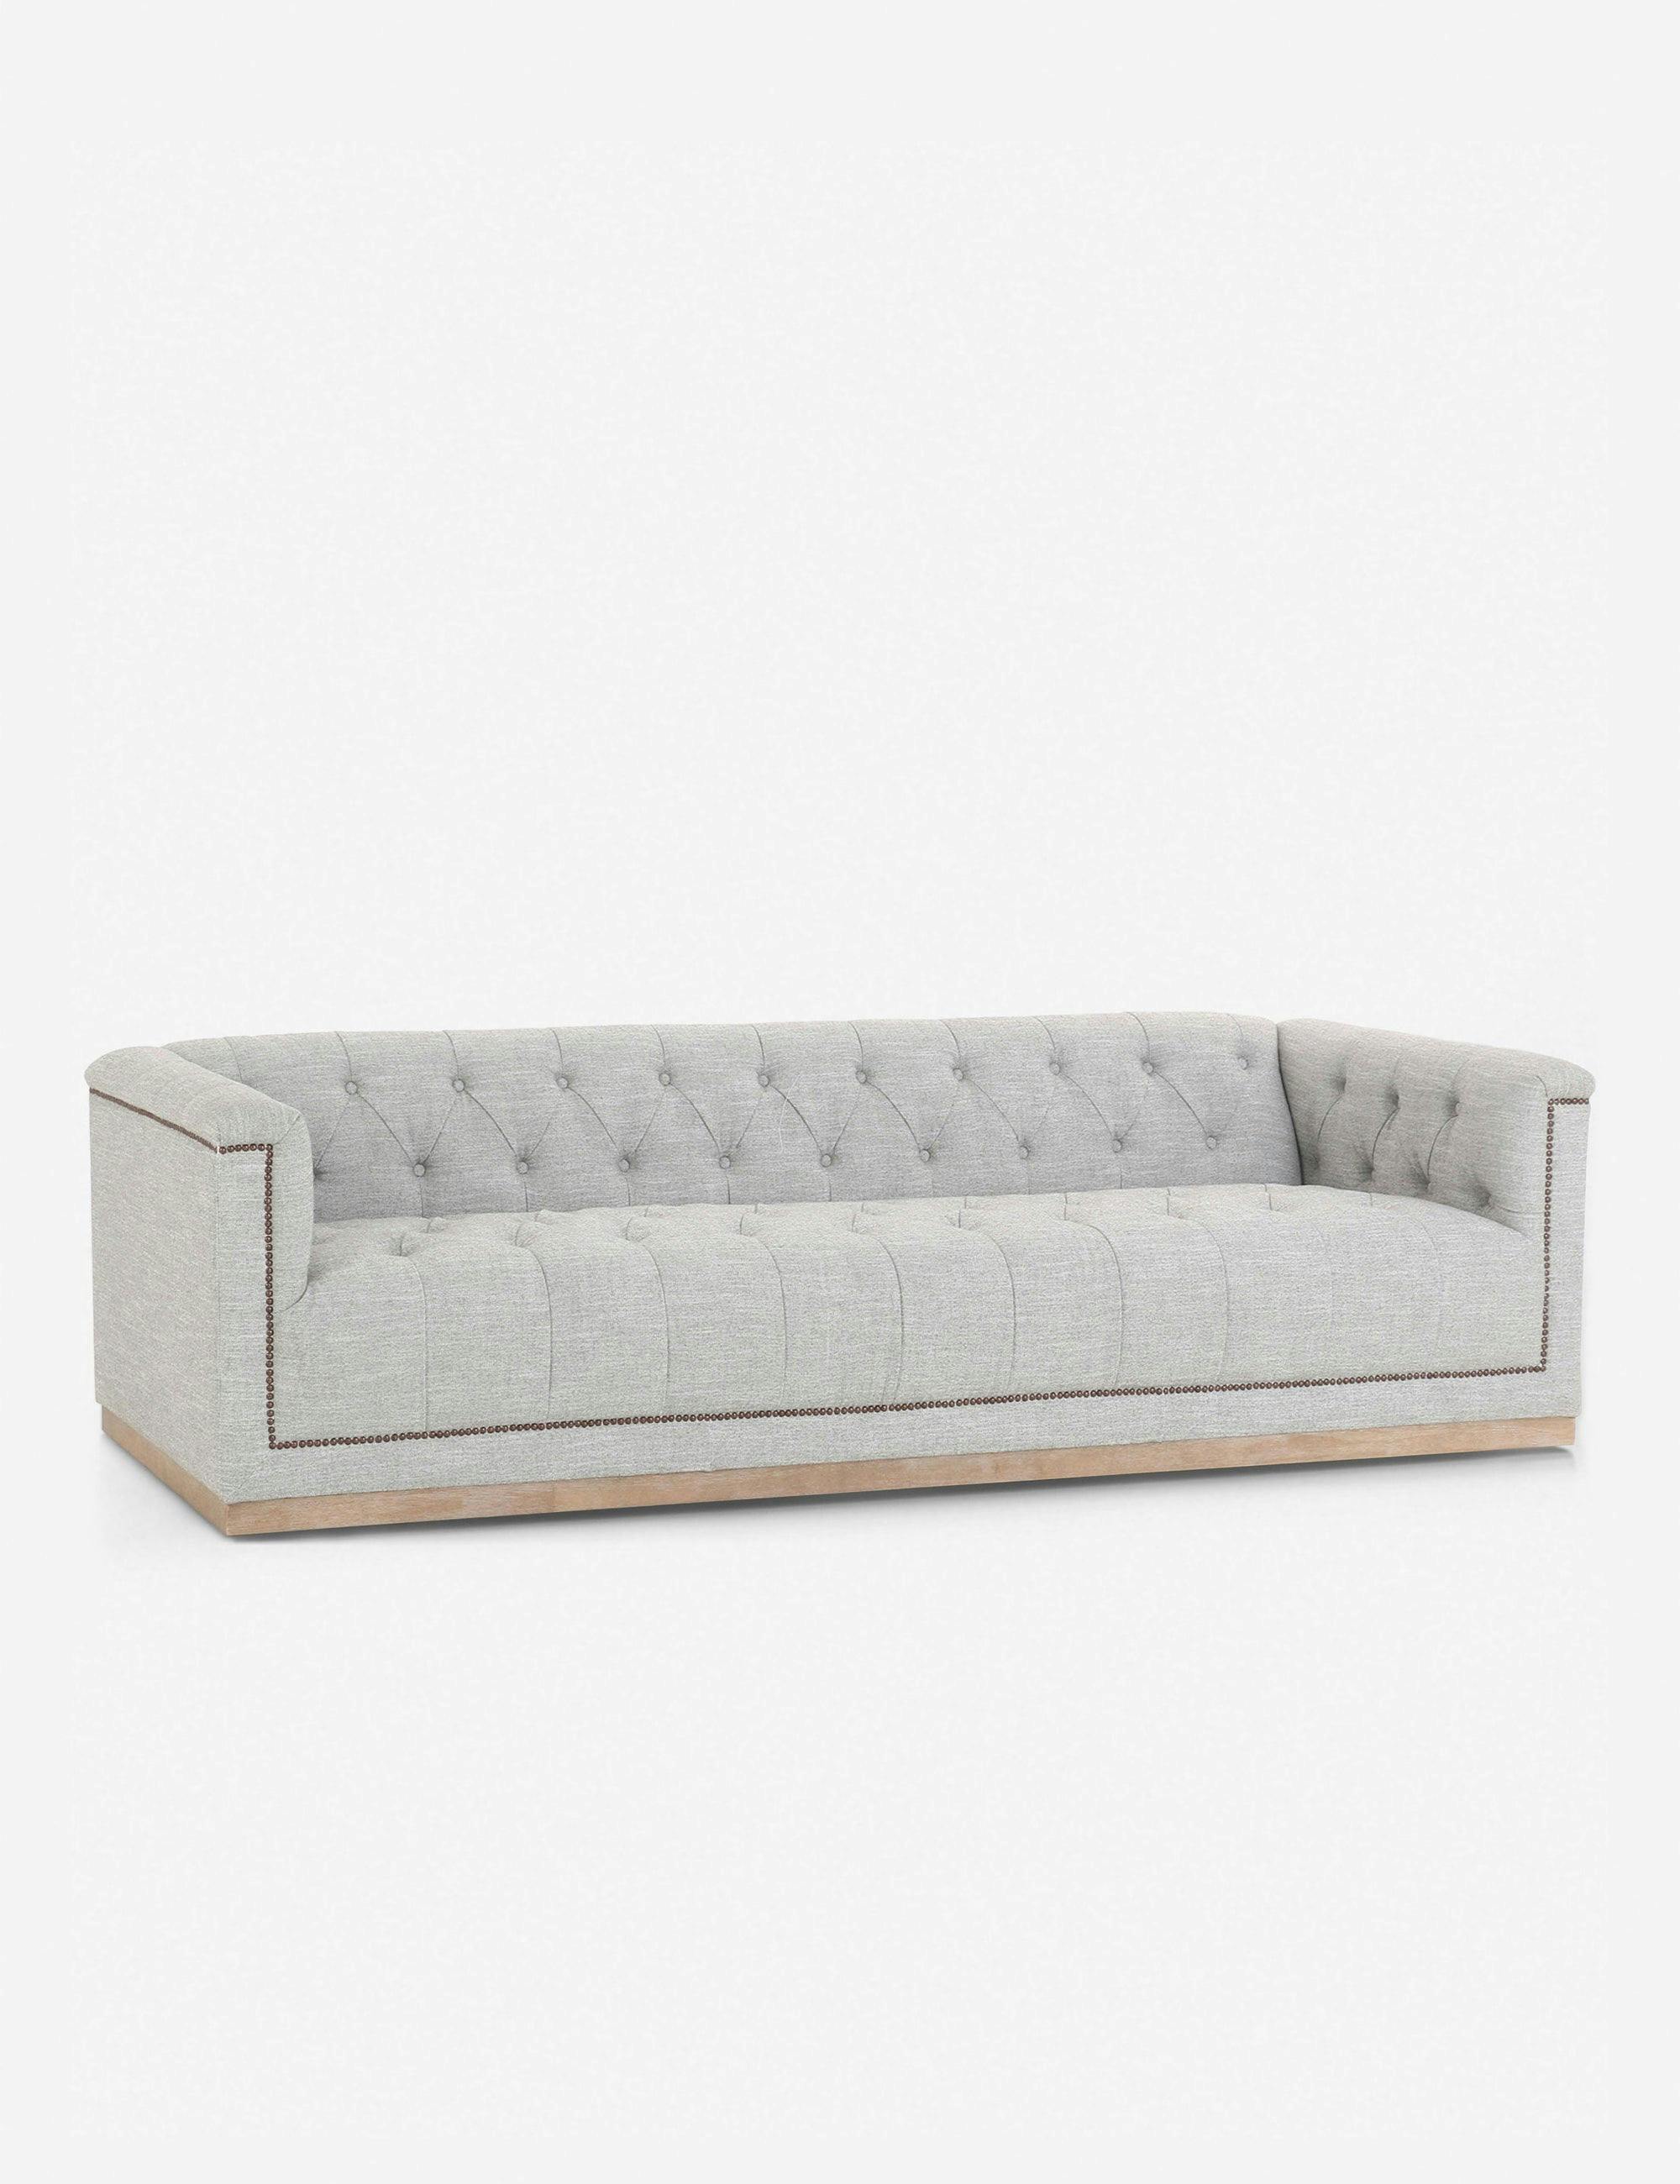 Leandra 95" Manor Gray Upholstered Tufted Sofa